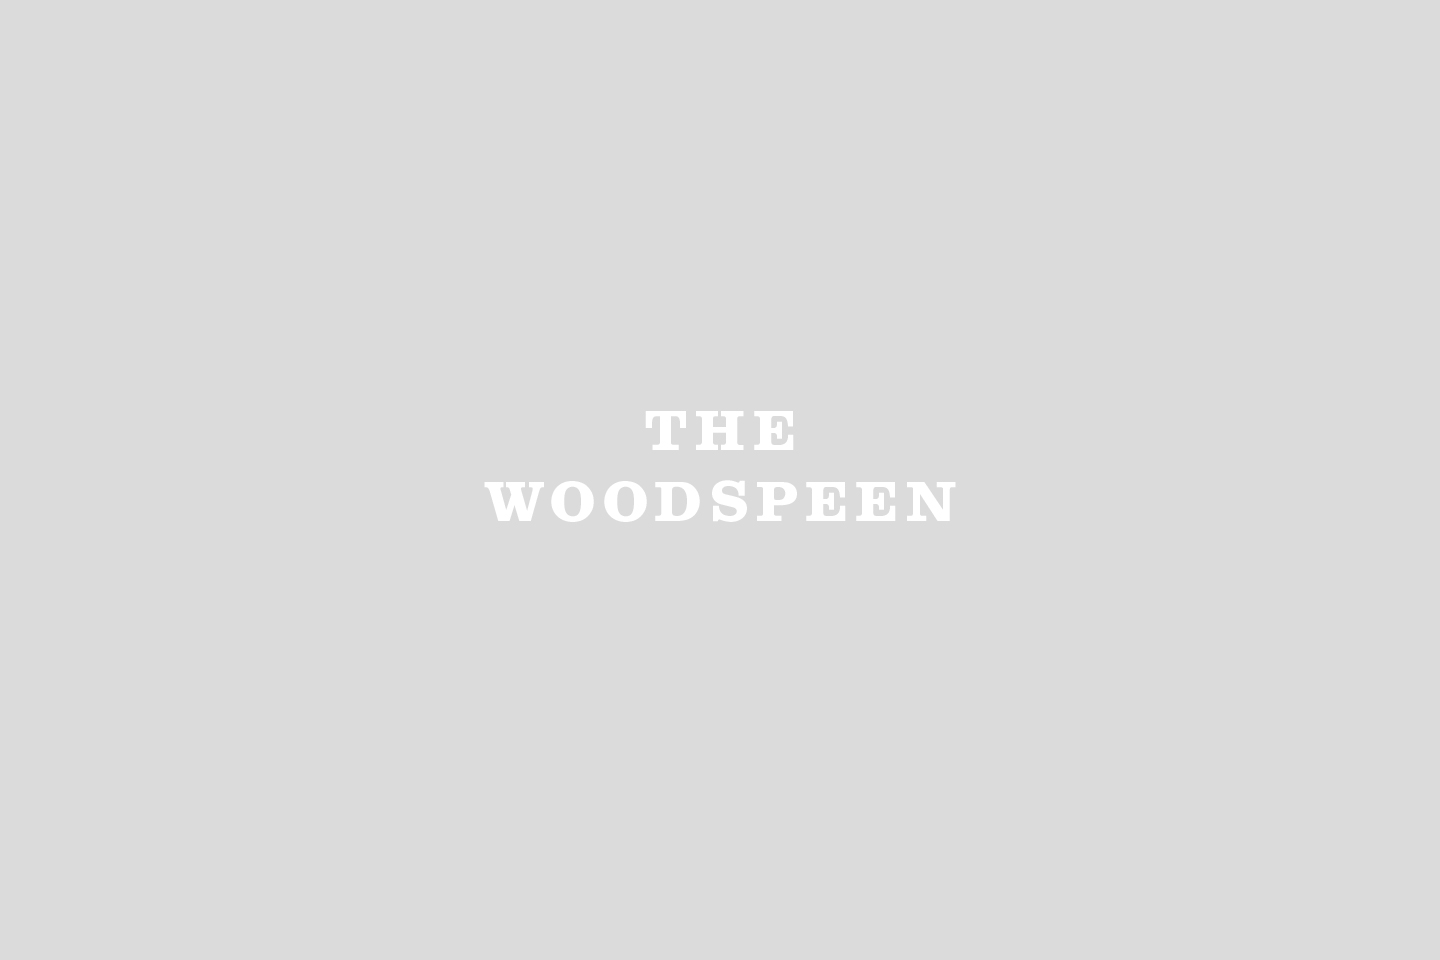 The Woodspeen logo